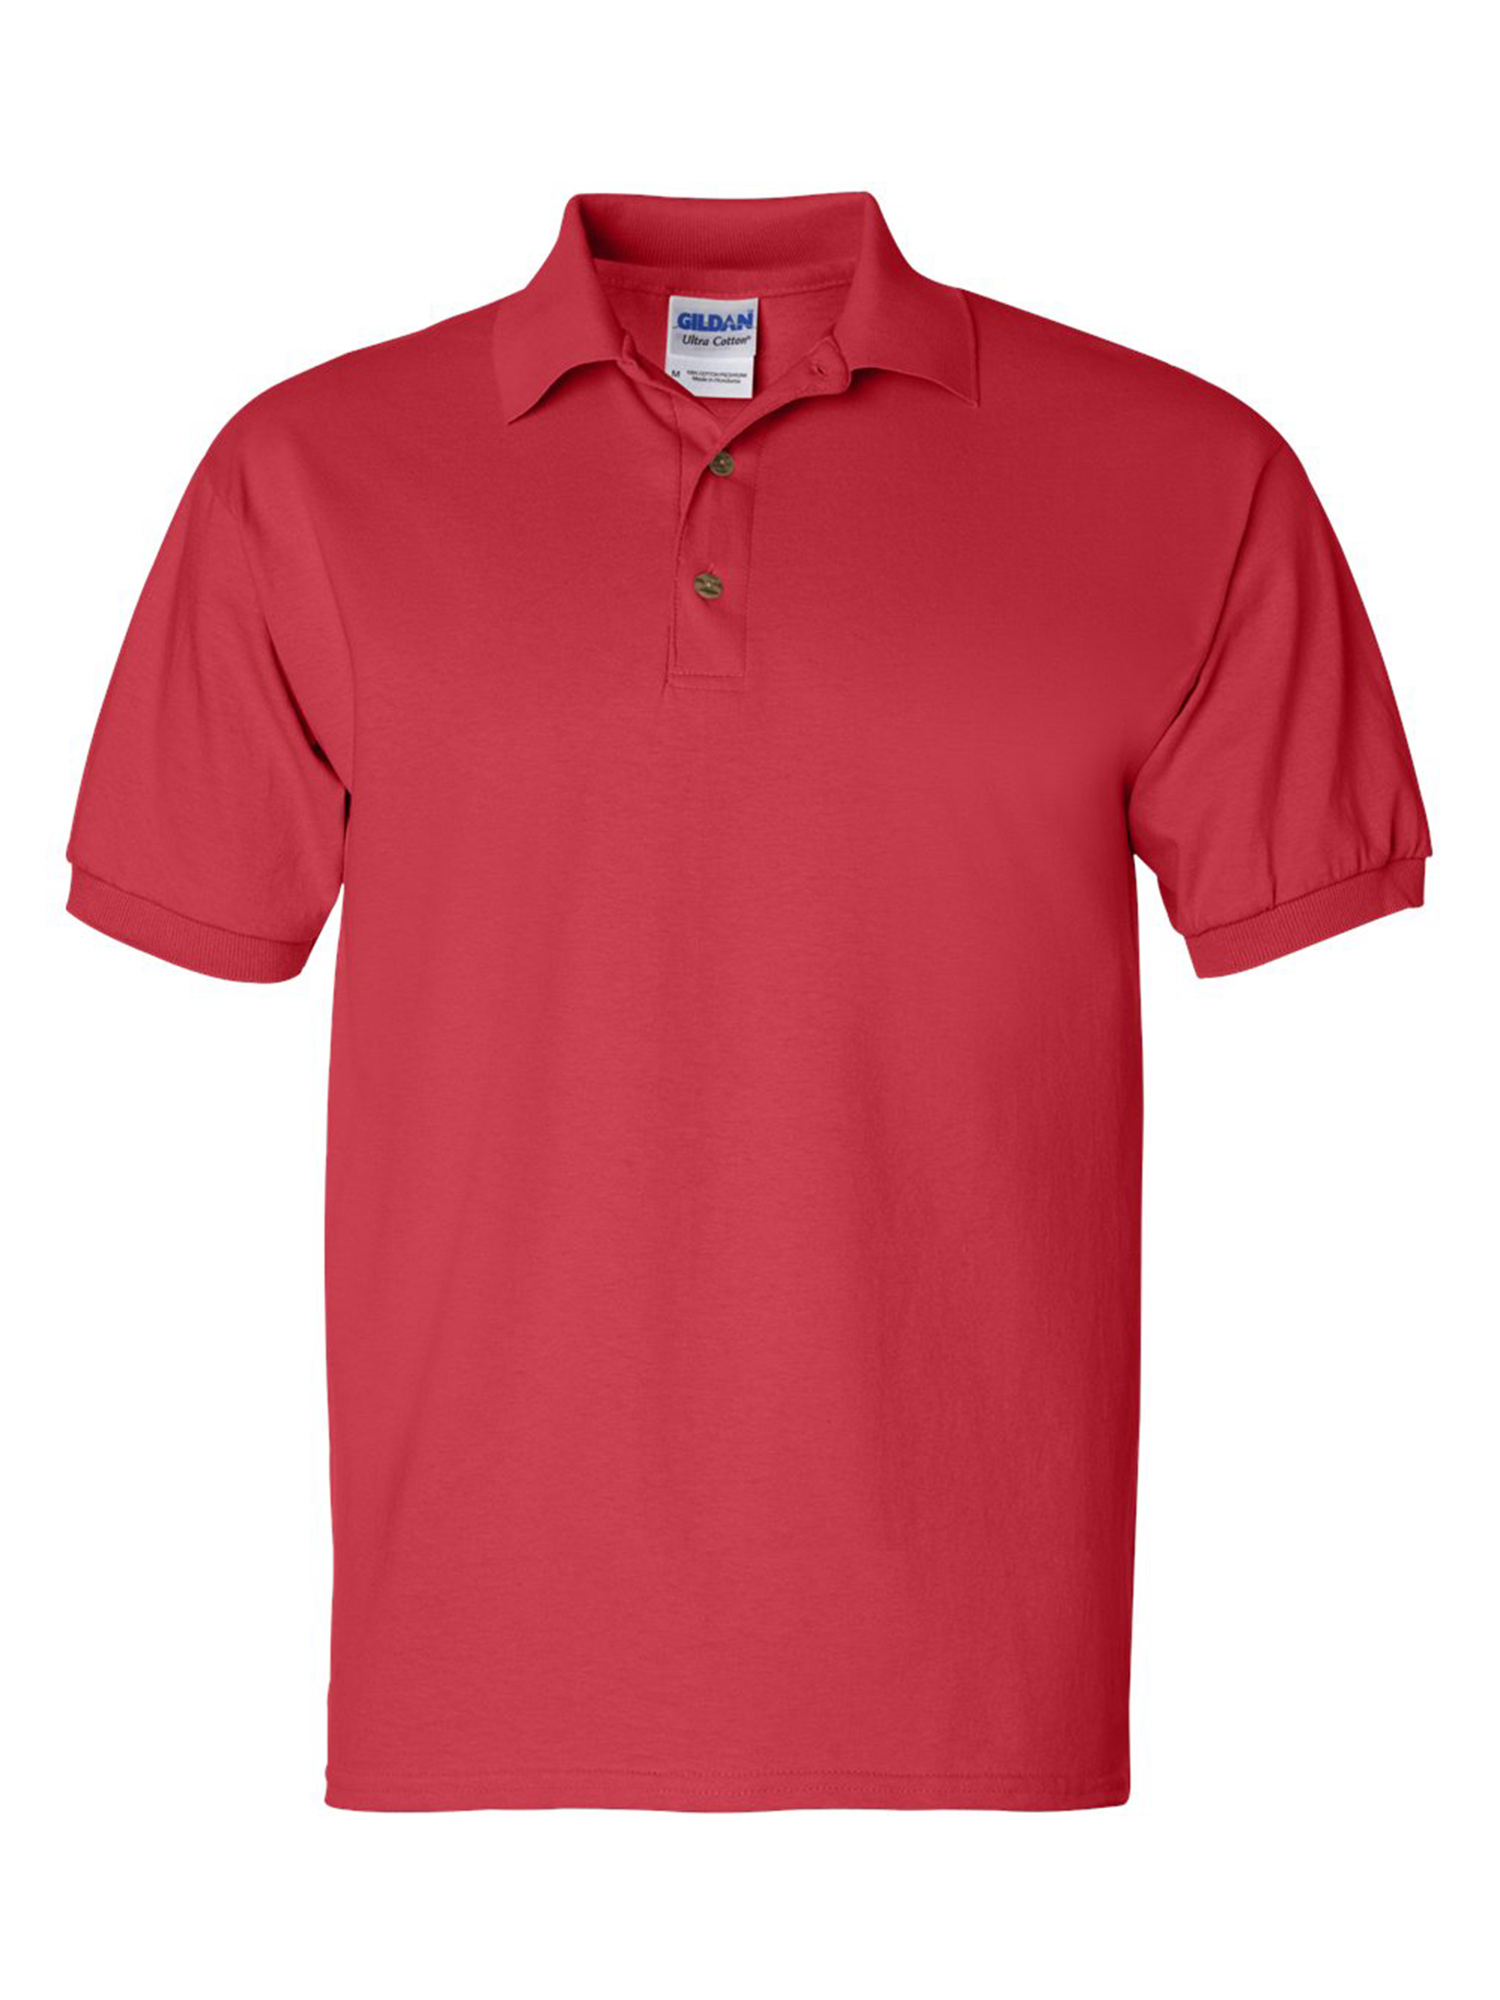 Gildan Ultra Cotton Jersey Sport Shirt Red Shirts for Men Polo Shirts for Men 2800 S M L XL 2XL Button Down T Shirts for Mens Polo Shirts with Colors Business Casual School - image 1 of 2